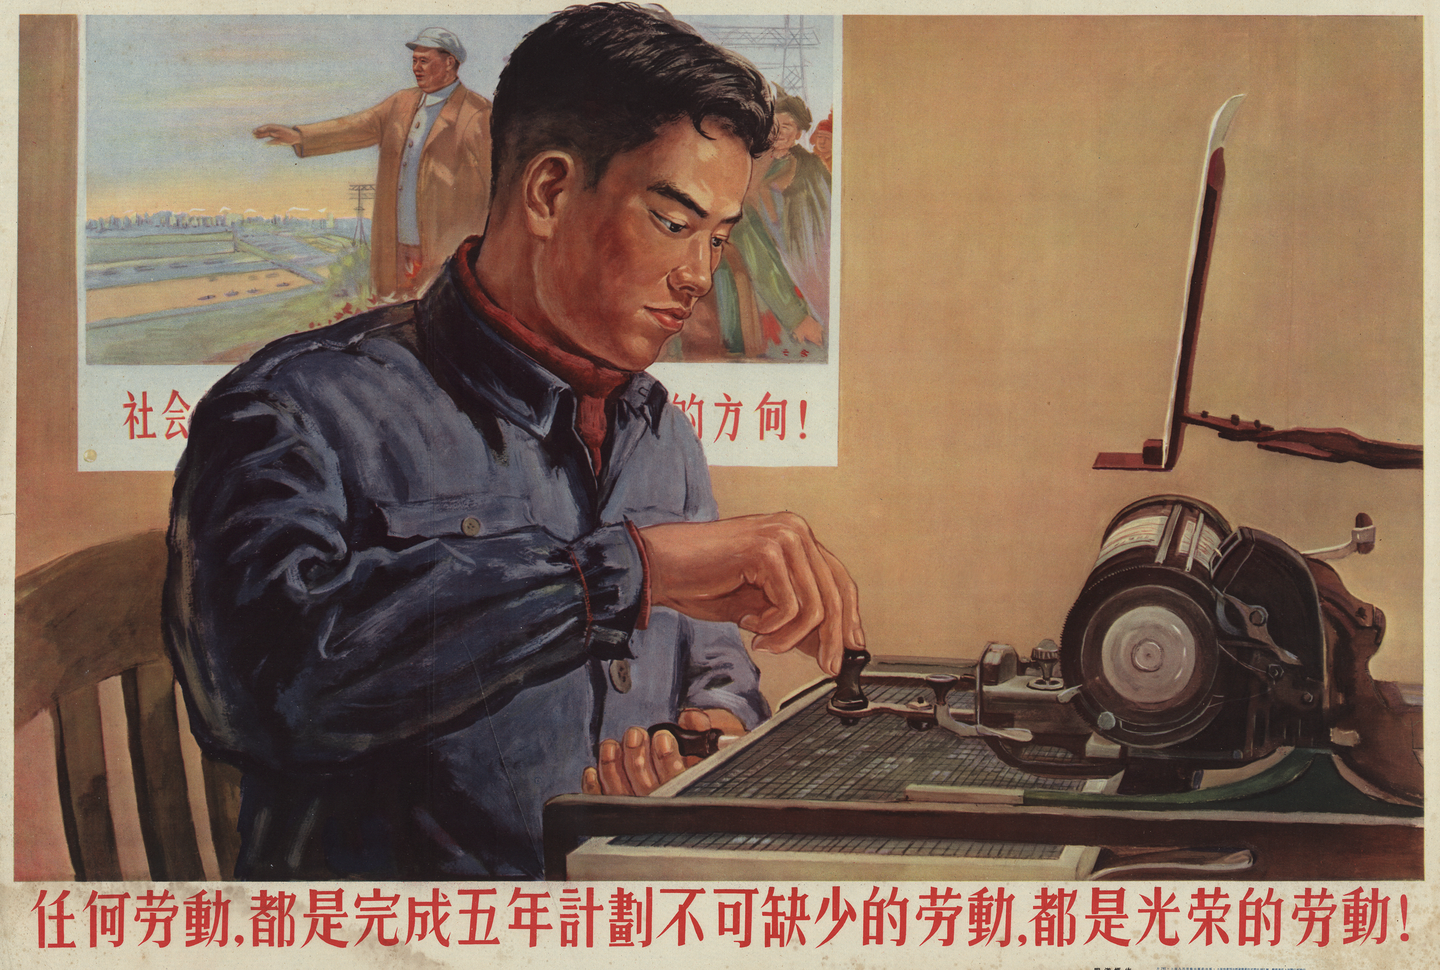 Источник: https://maoeraobjects.ac.uk/sources/typewriters-mao-propaganda-poster/